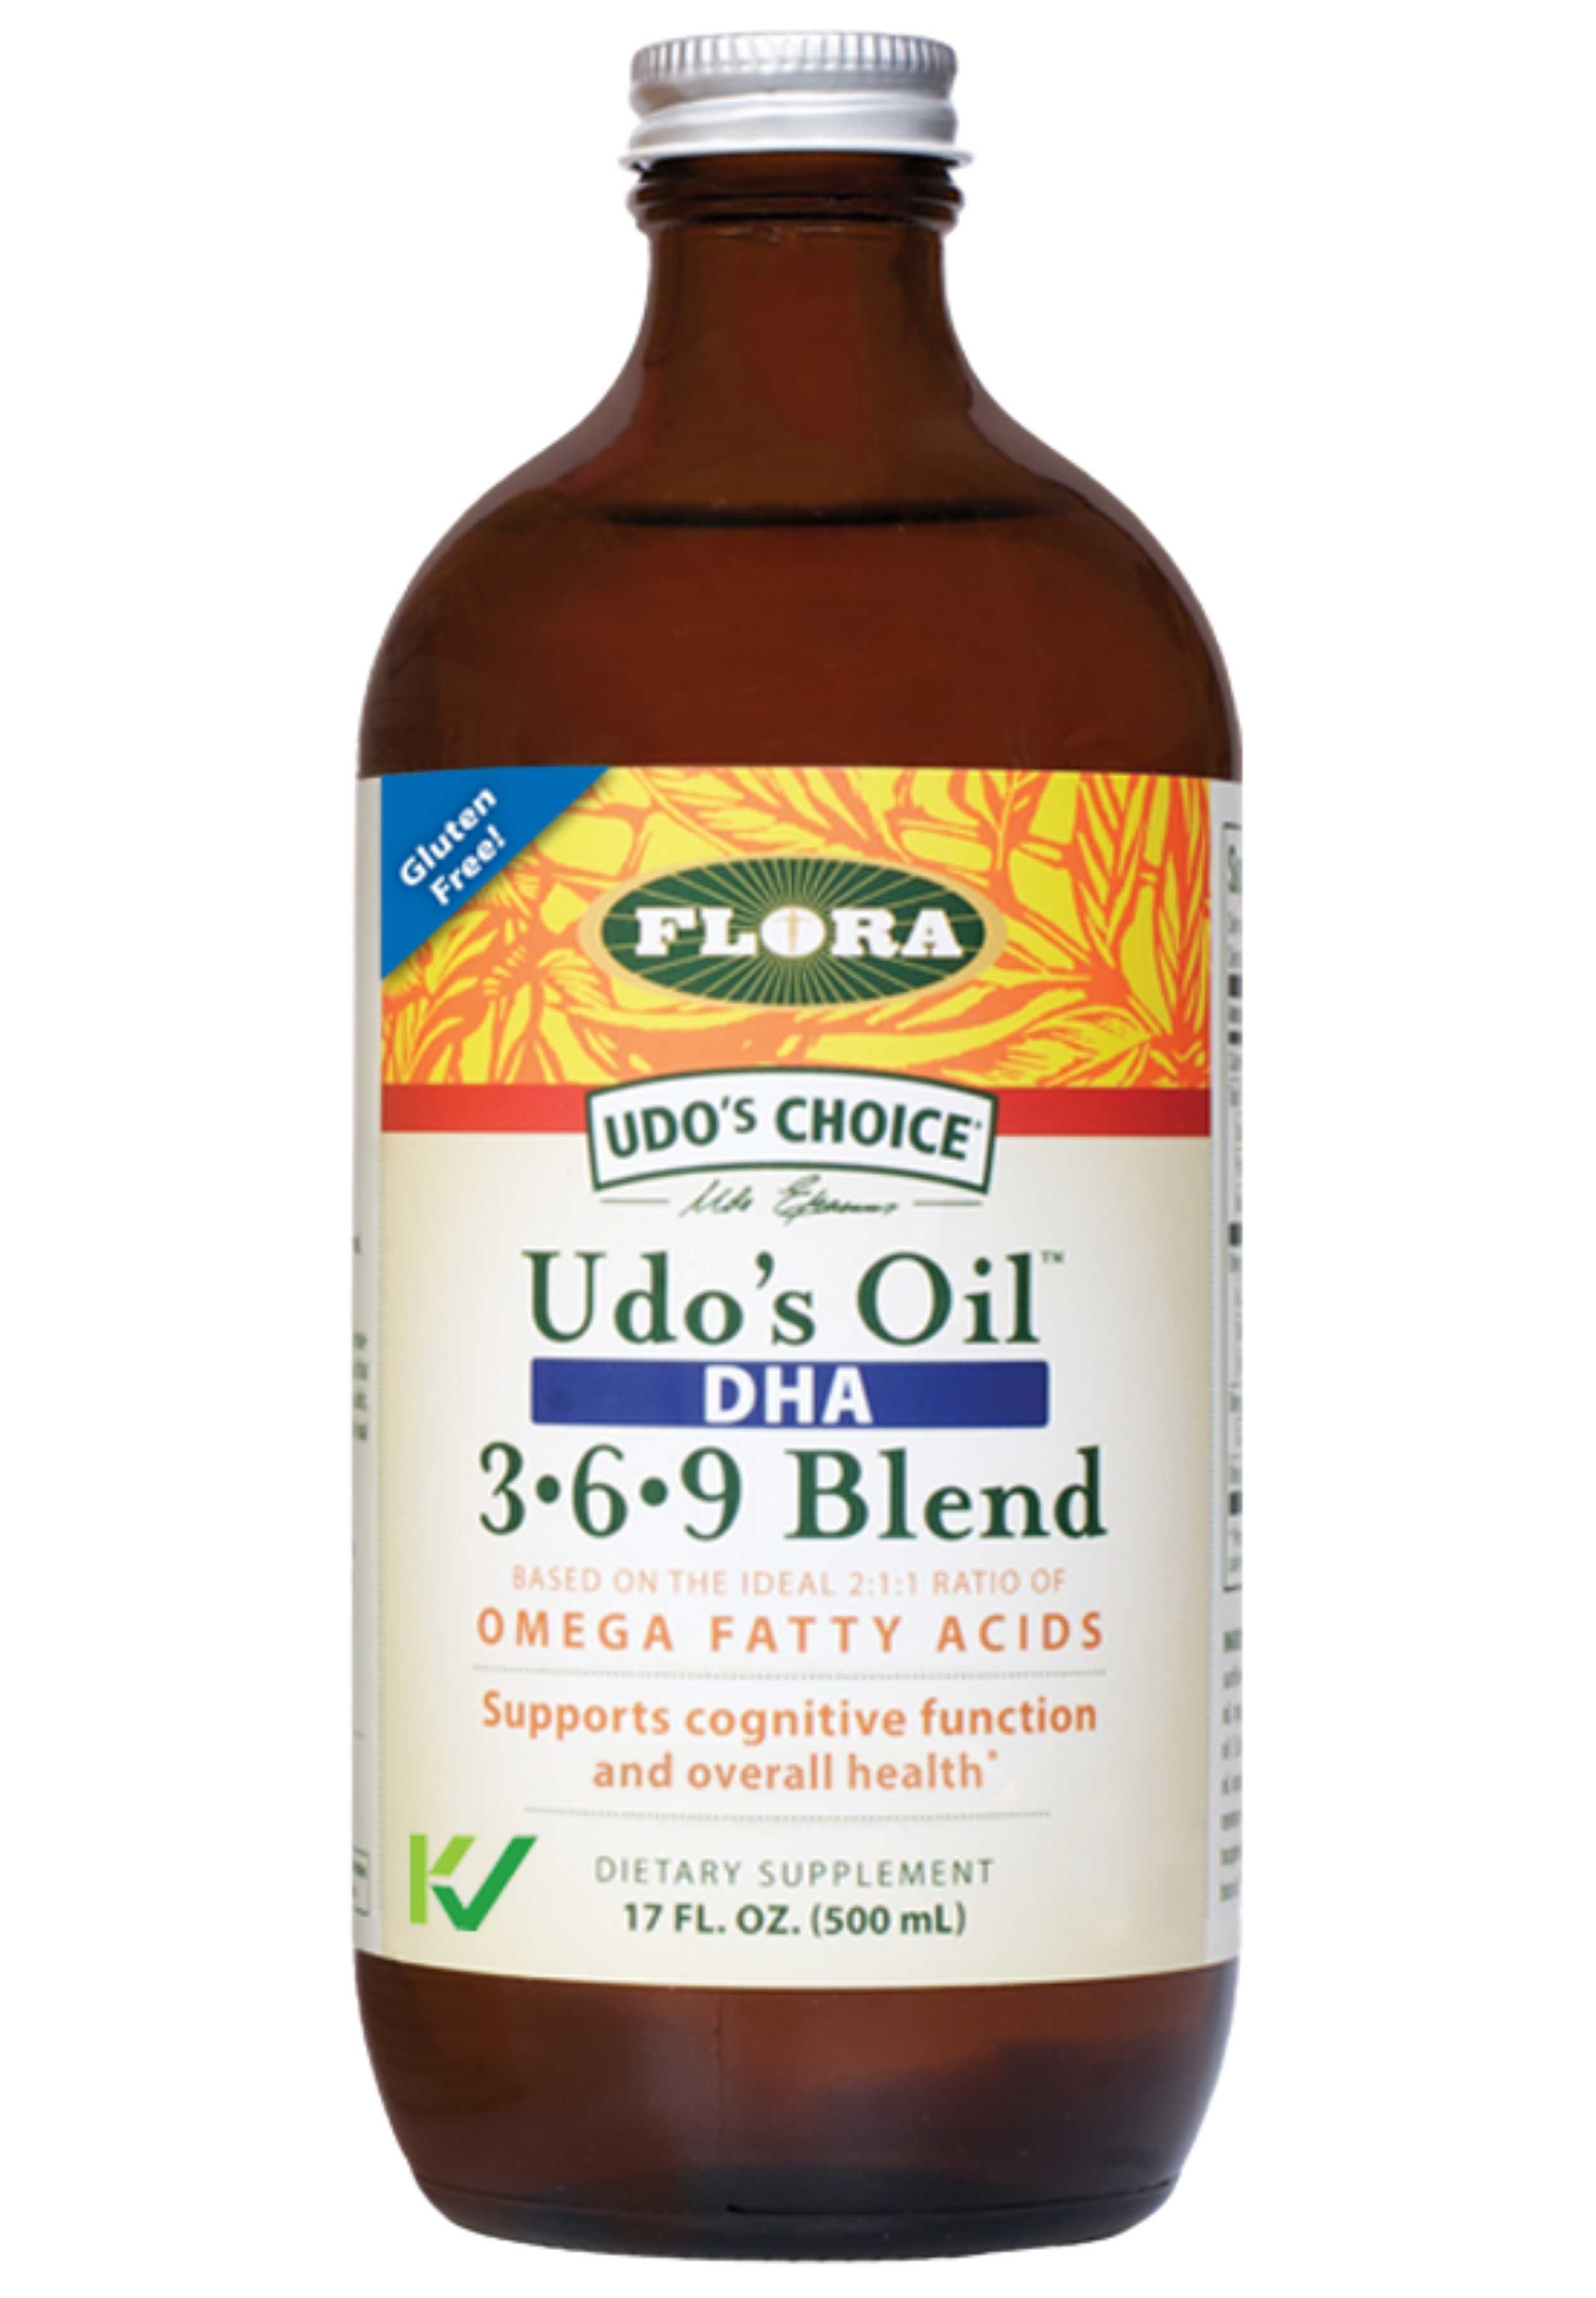 Flora Udo's Choice DHA Oil Blend (3•6•9 Blend)